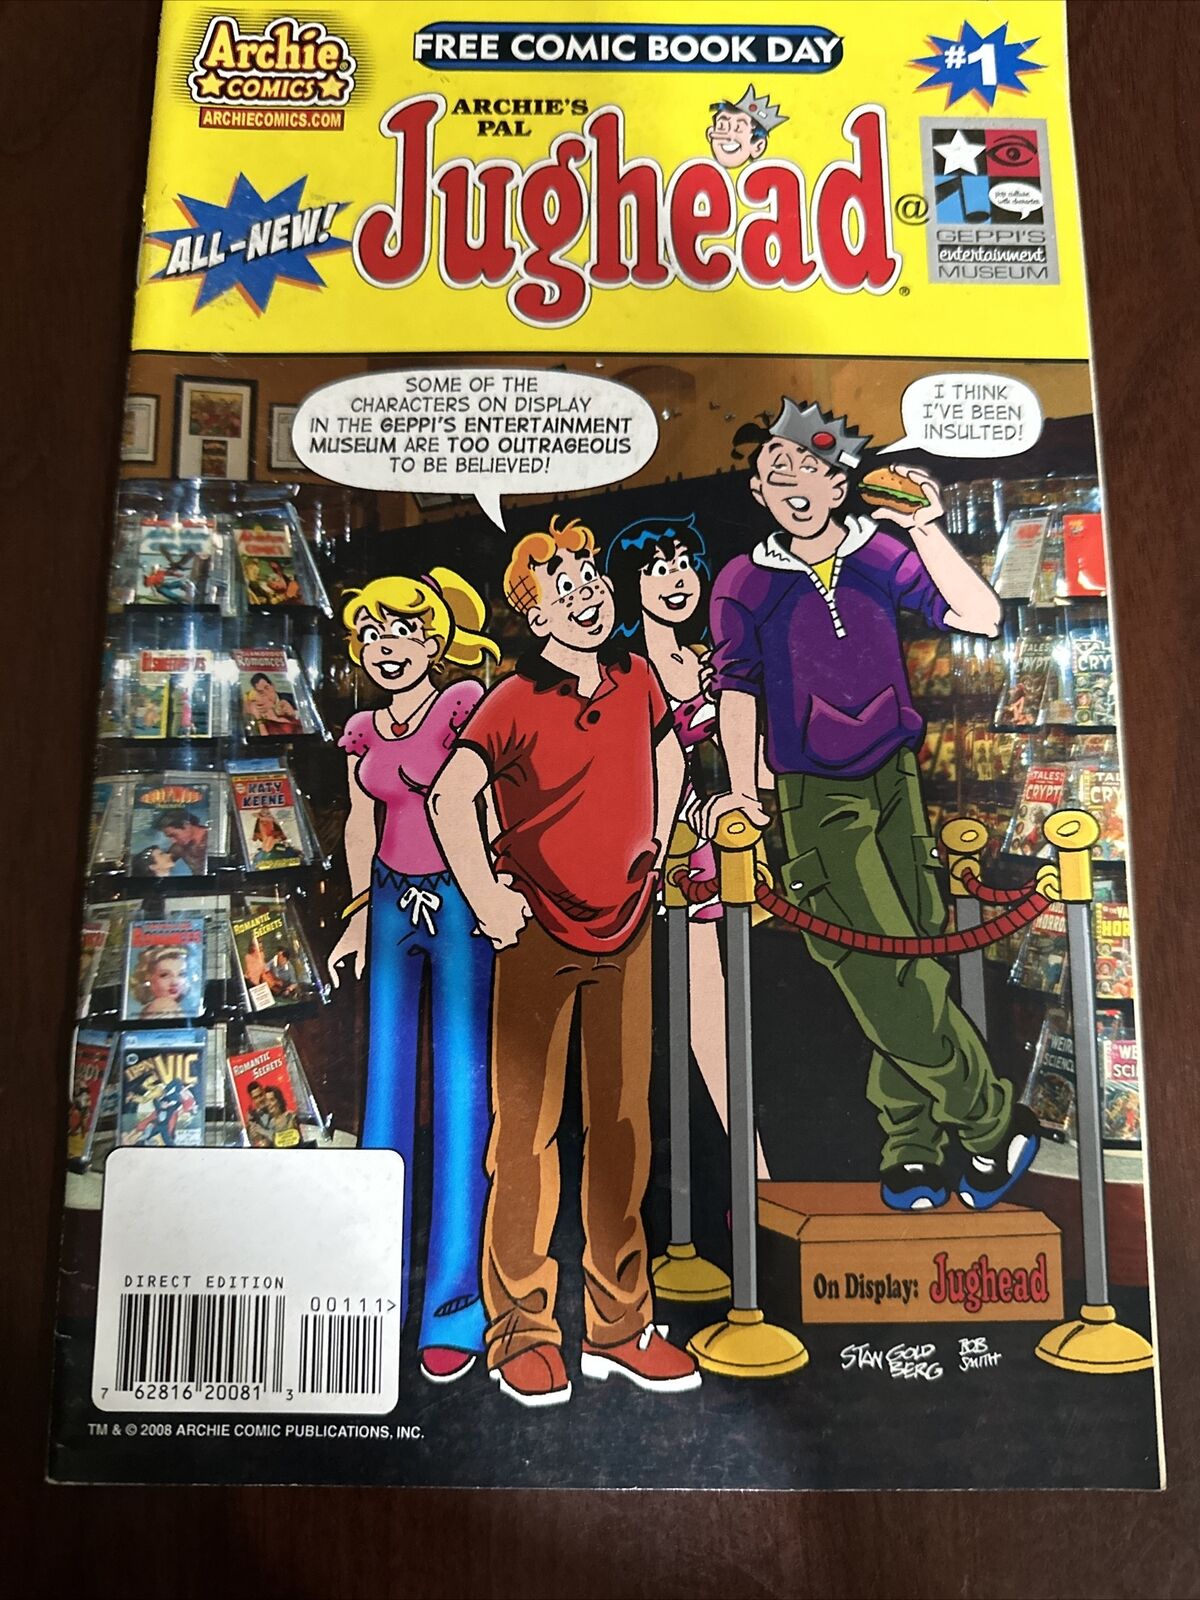 All New Archie's Pal Jughead #1 2008 FCBD Archie Comics